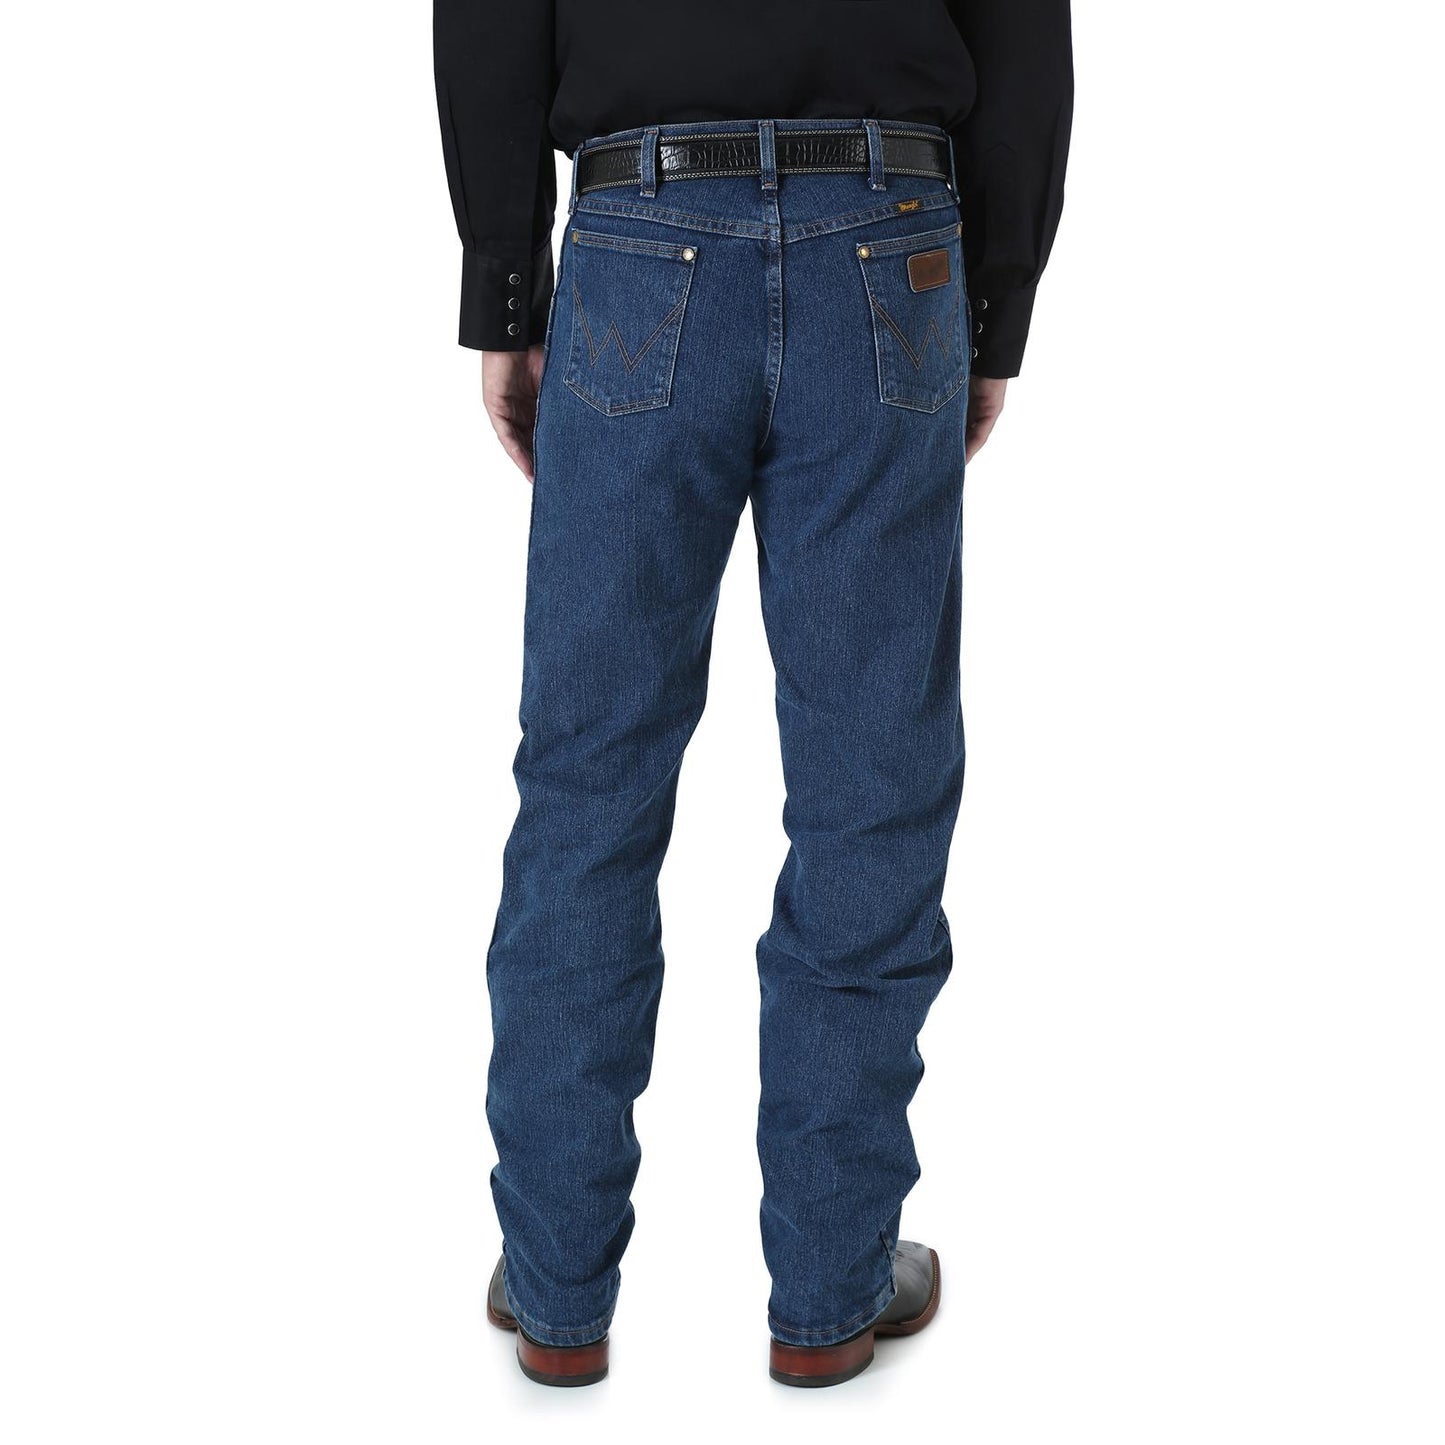 Wrangler® Premium Performance Advanced Comfort Cowboy Cut® Jeans - Regular Fit - Mid Stone